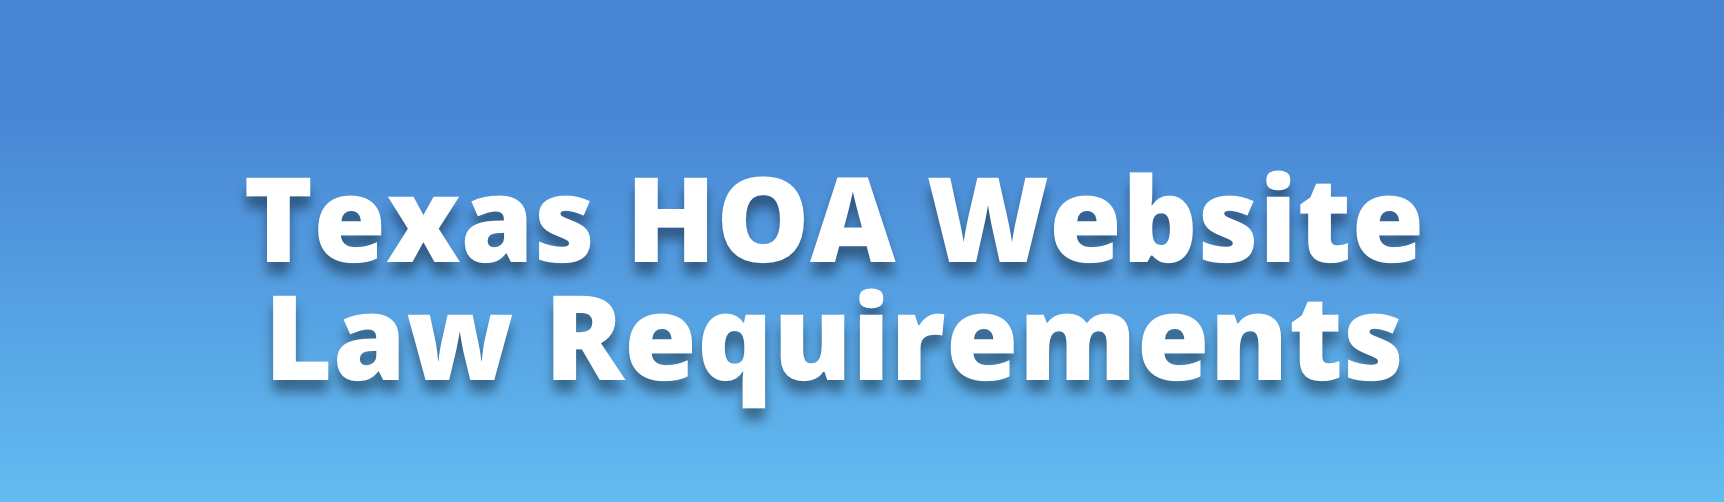 Texas HOA Website Requirements